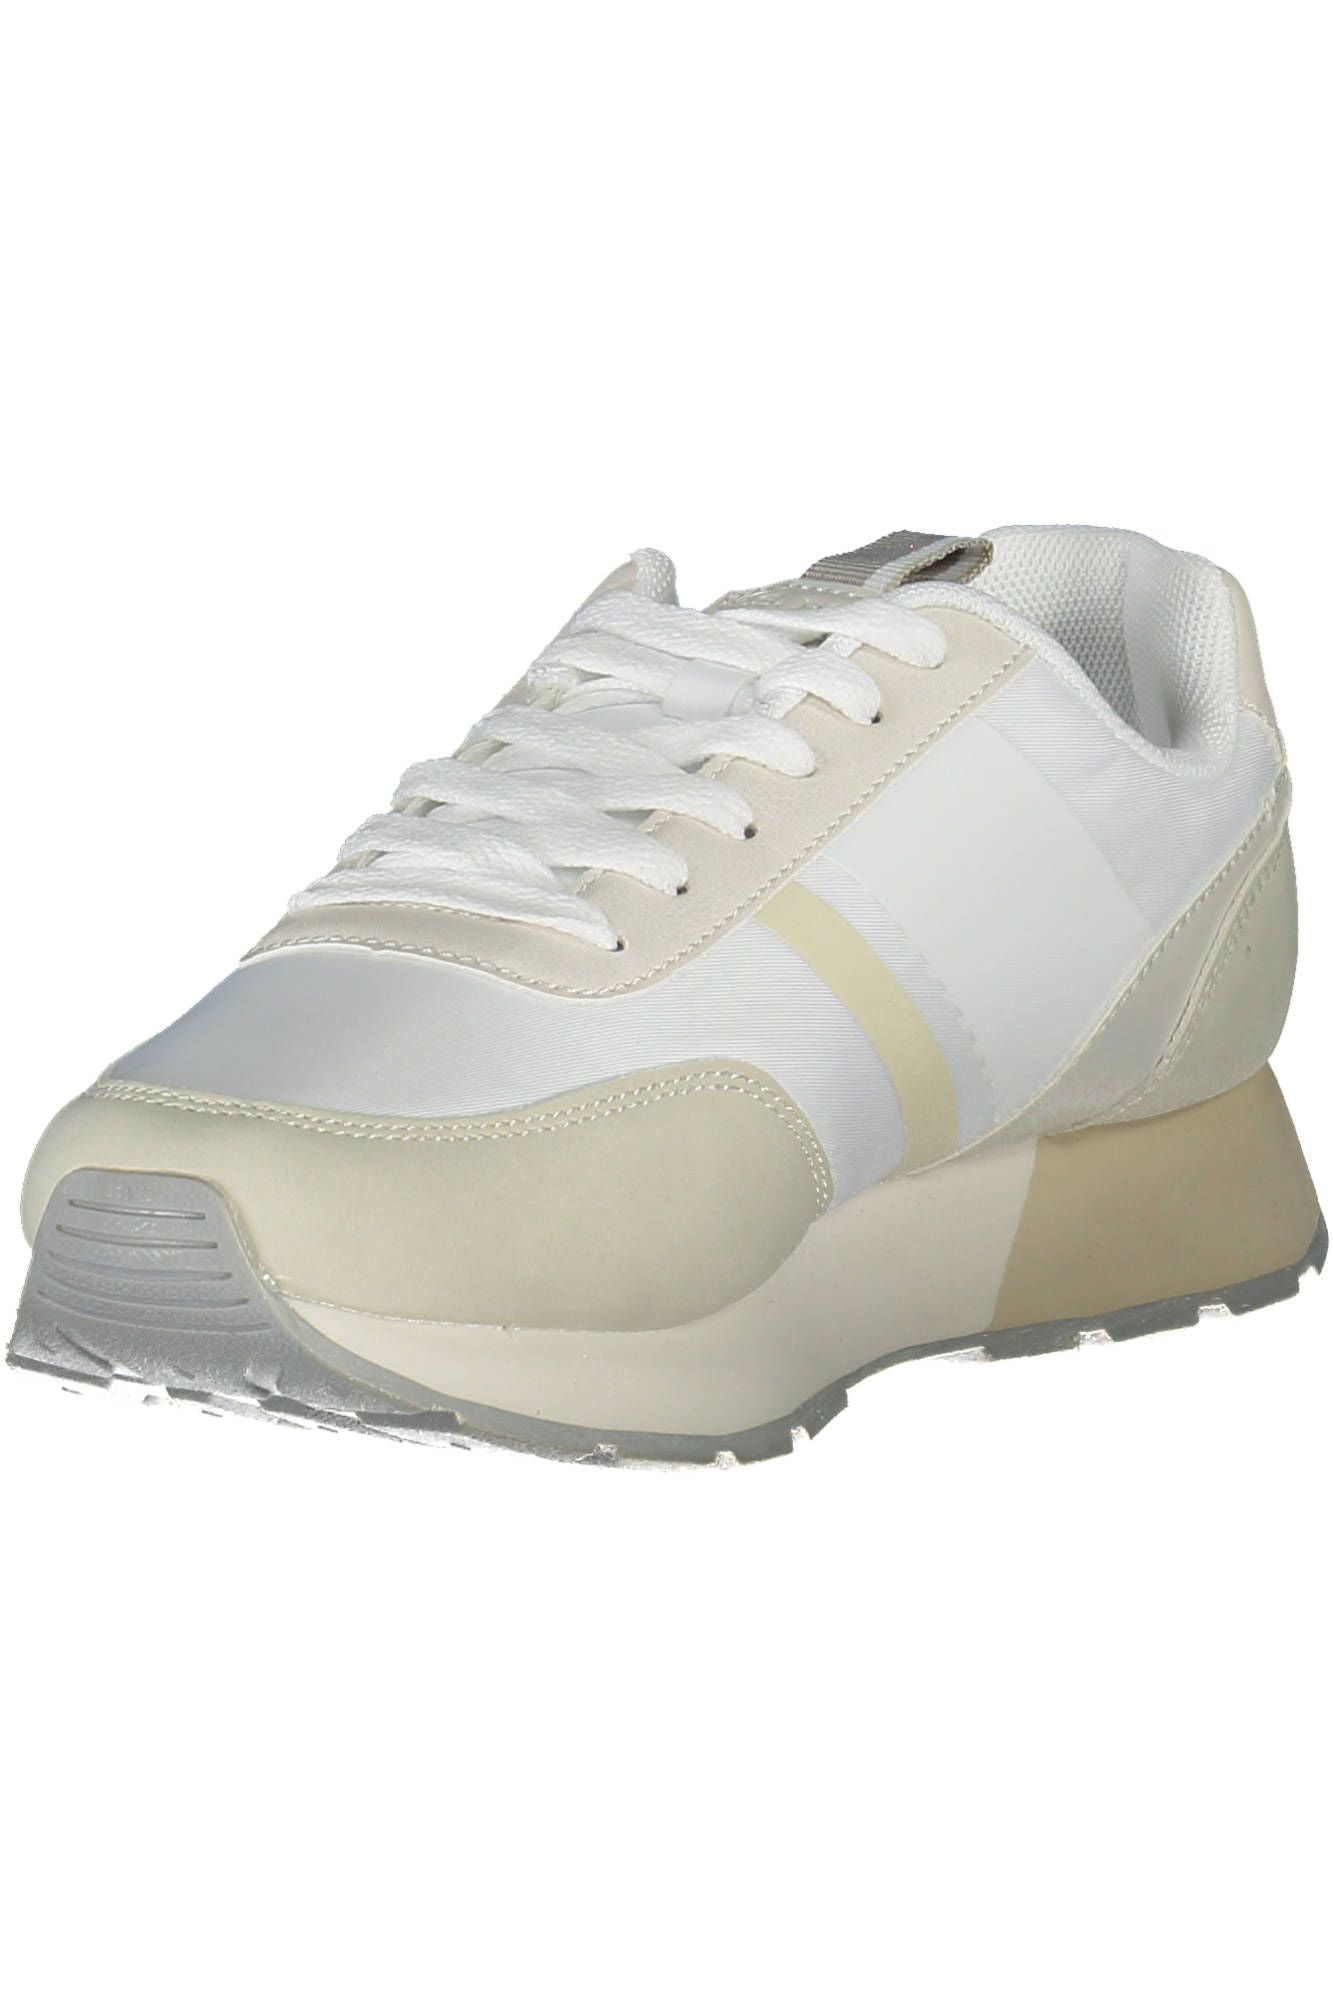 U.S. Polo Assn. White Nylon Sneaker